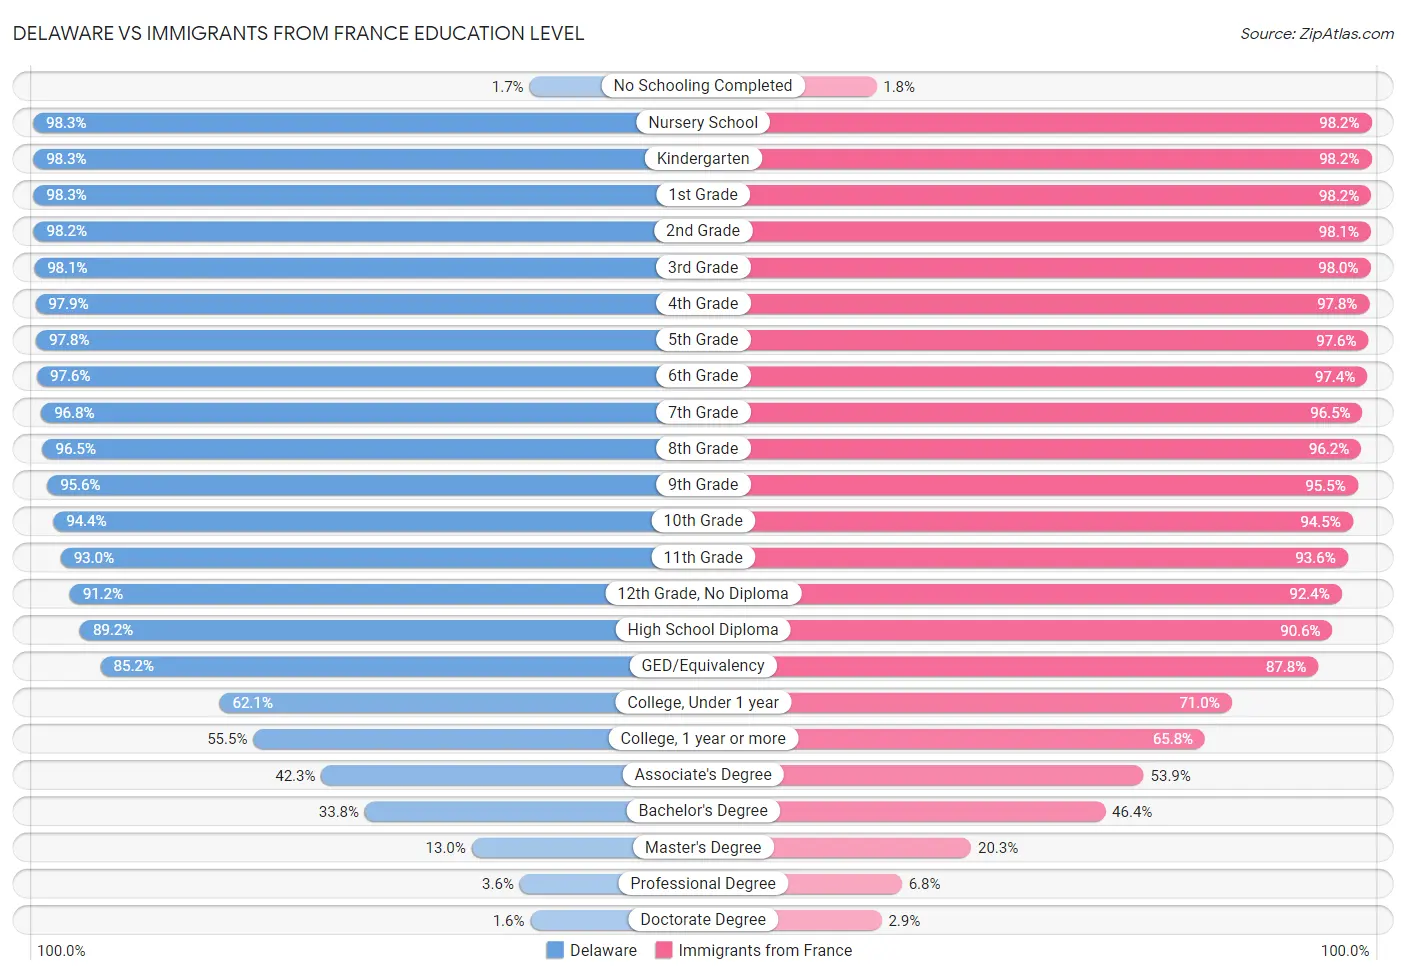 Delaware vs Immigrants from France Education Level